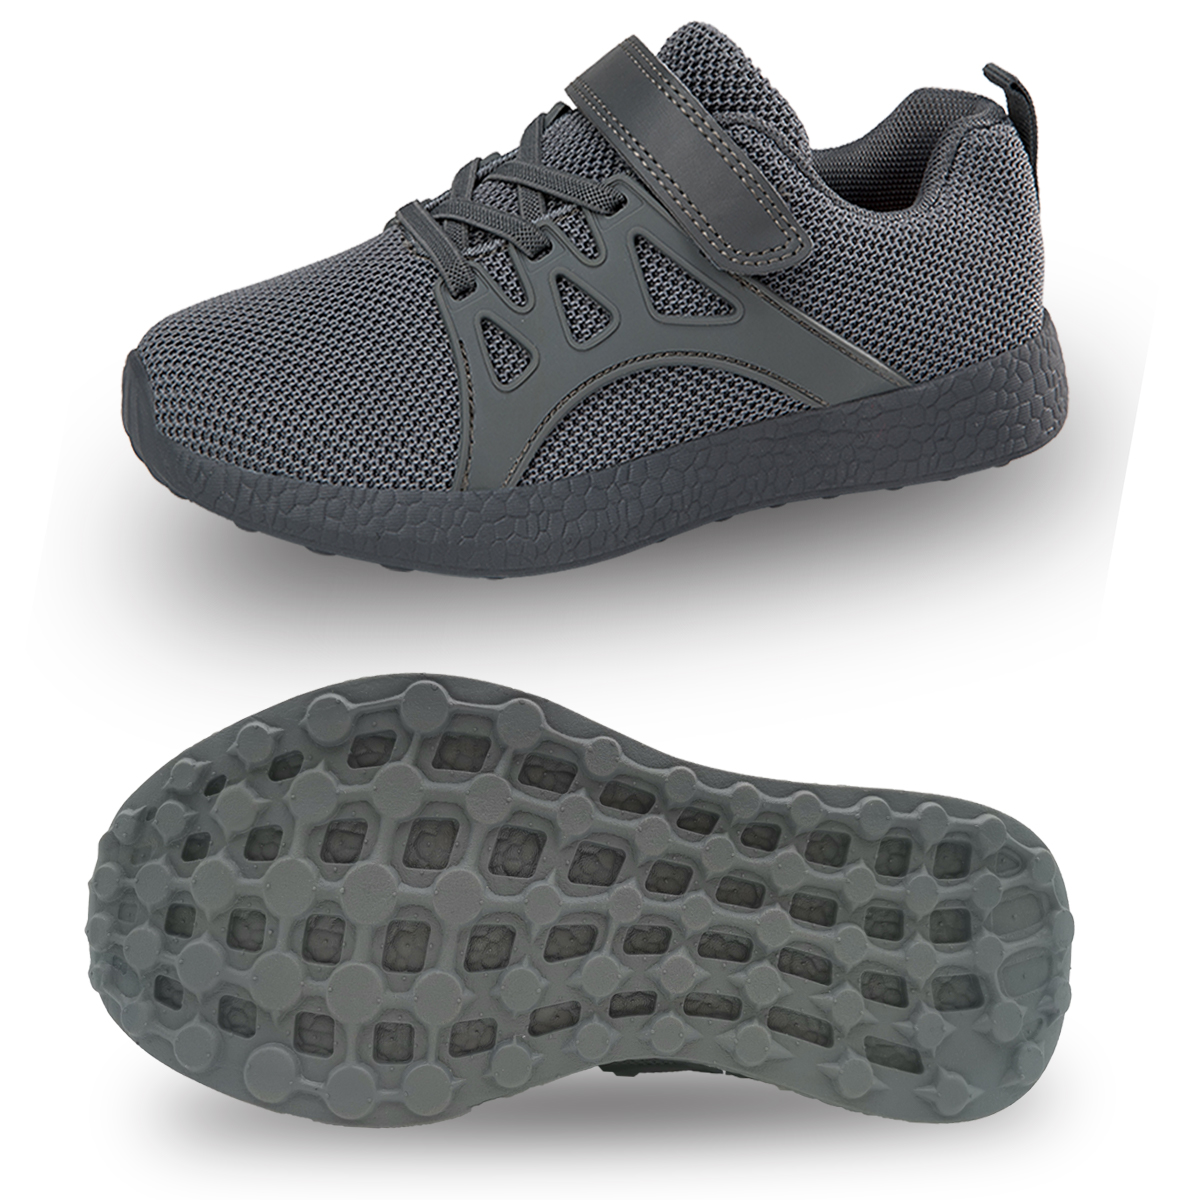 Stepedia Kids Tennis Shoes Boys Girls Lightweight Breathable Walking Running Sneakers Dark Grey, Size 1 - image 1 of 6